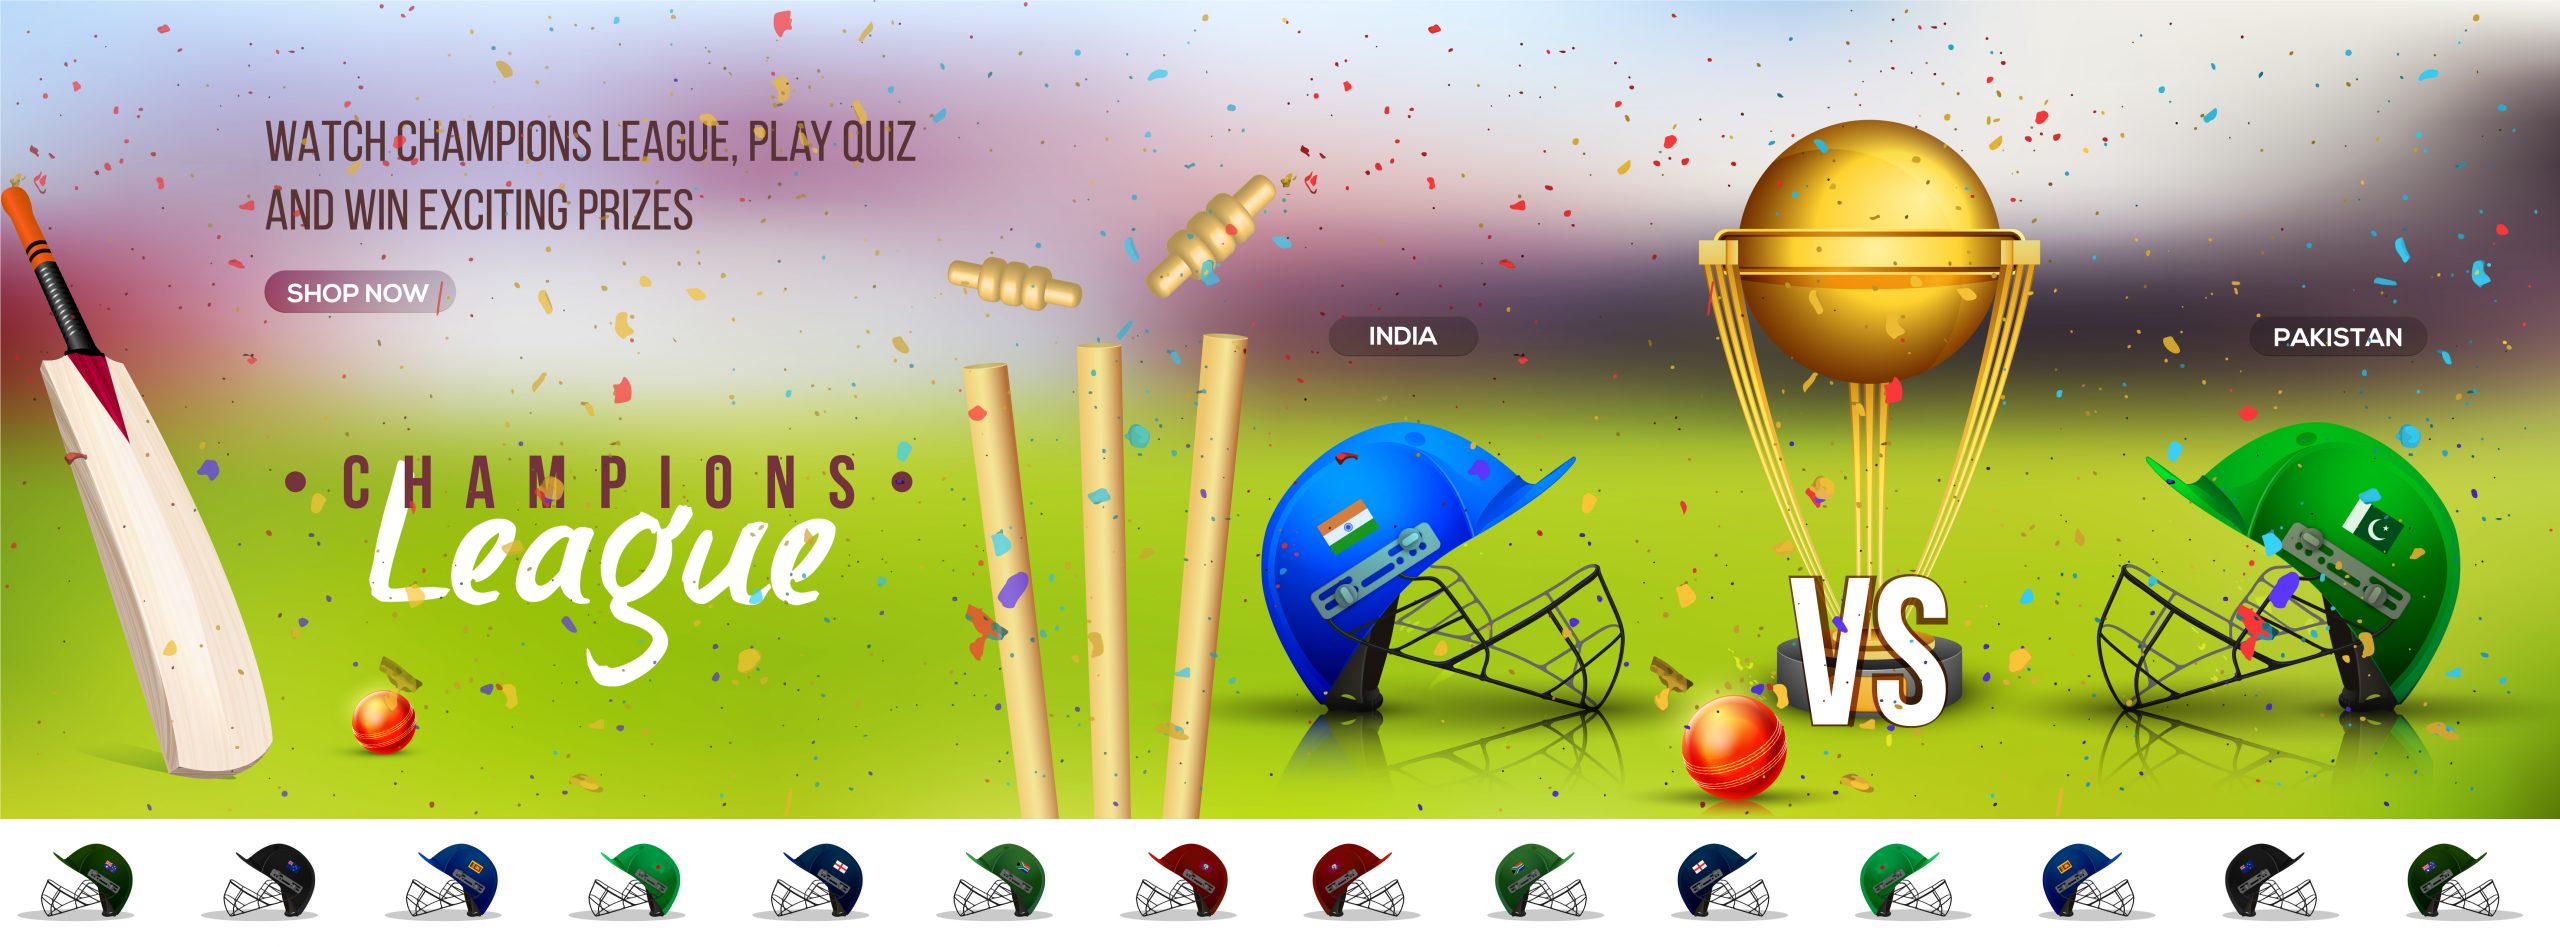 Cricket Champions League social media banner design with participant countries batsman helmets and golden trophy.